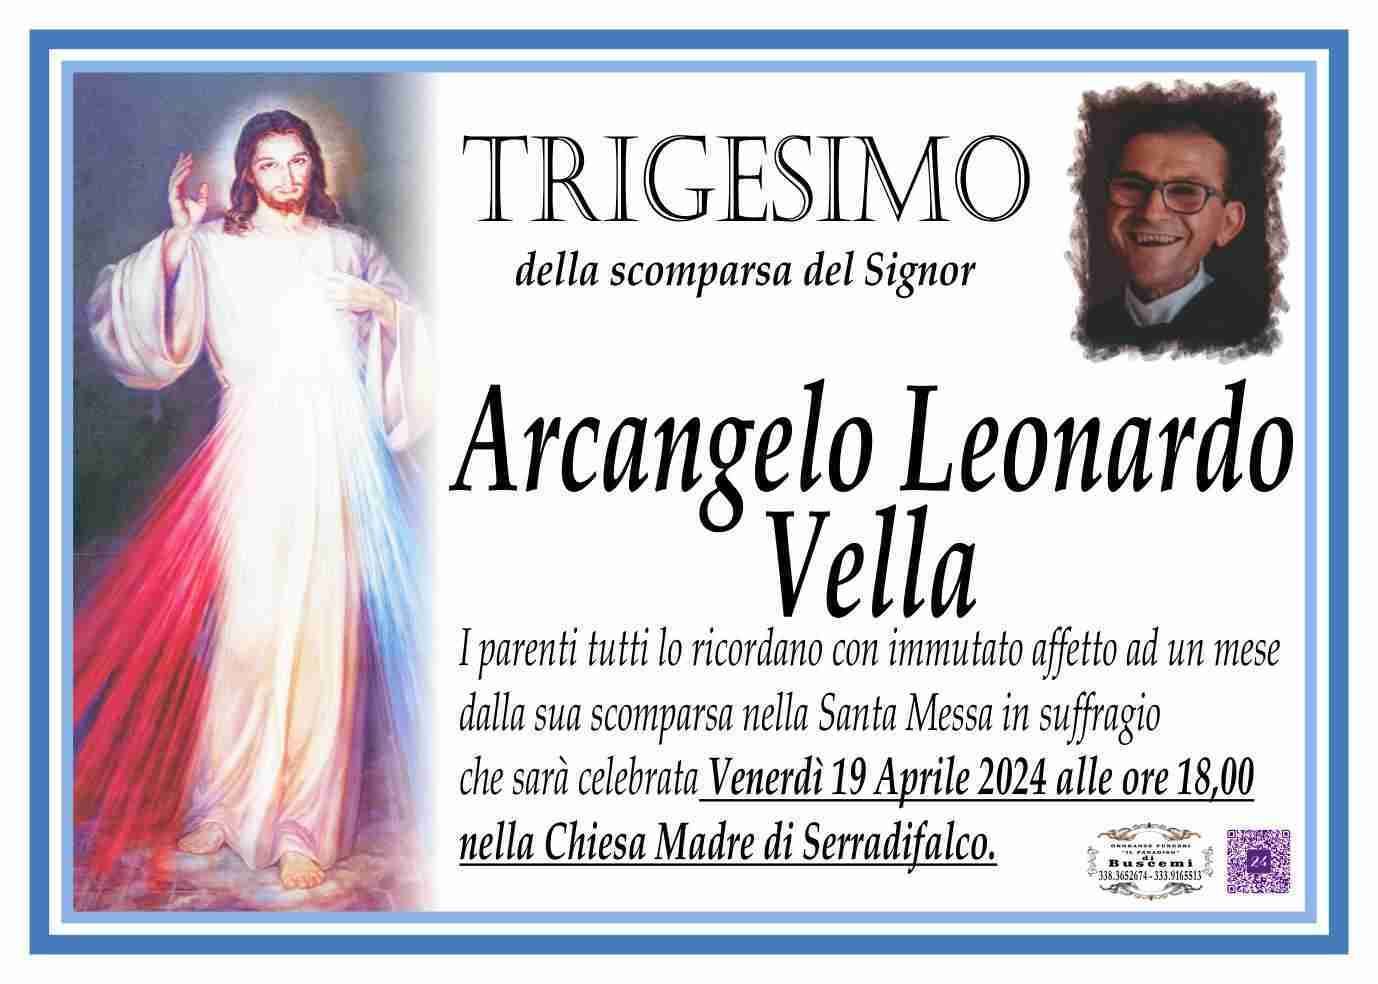 Arcangelo Leonardo Vella